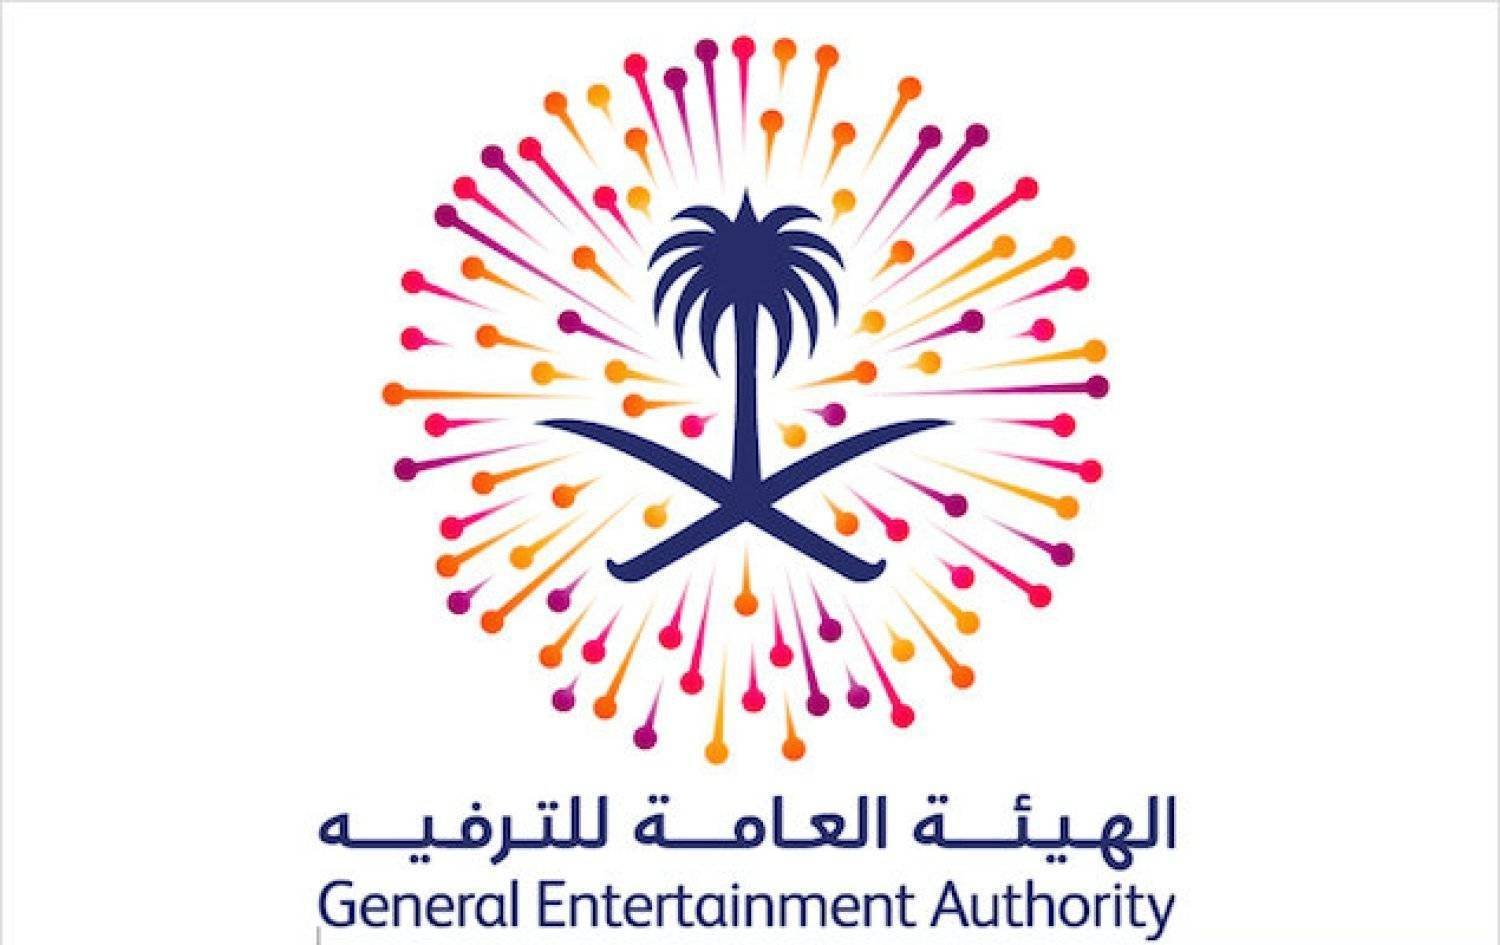 The Saudi General Entertainment Authority (GEA) logo